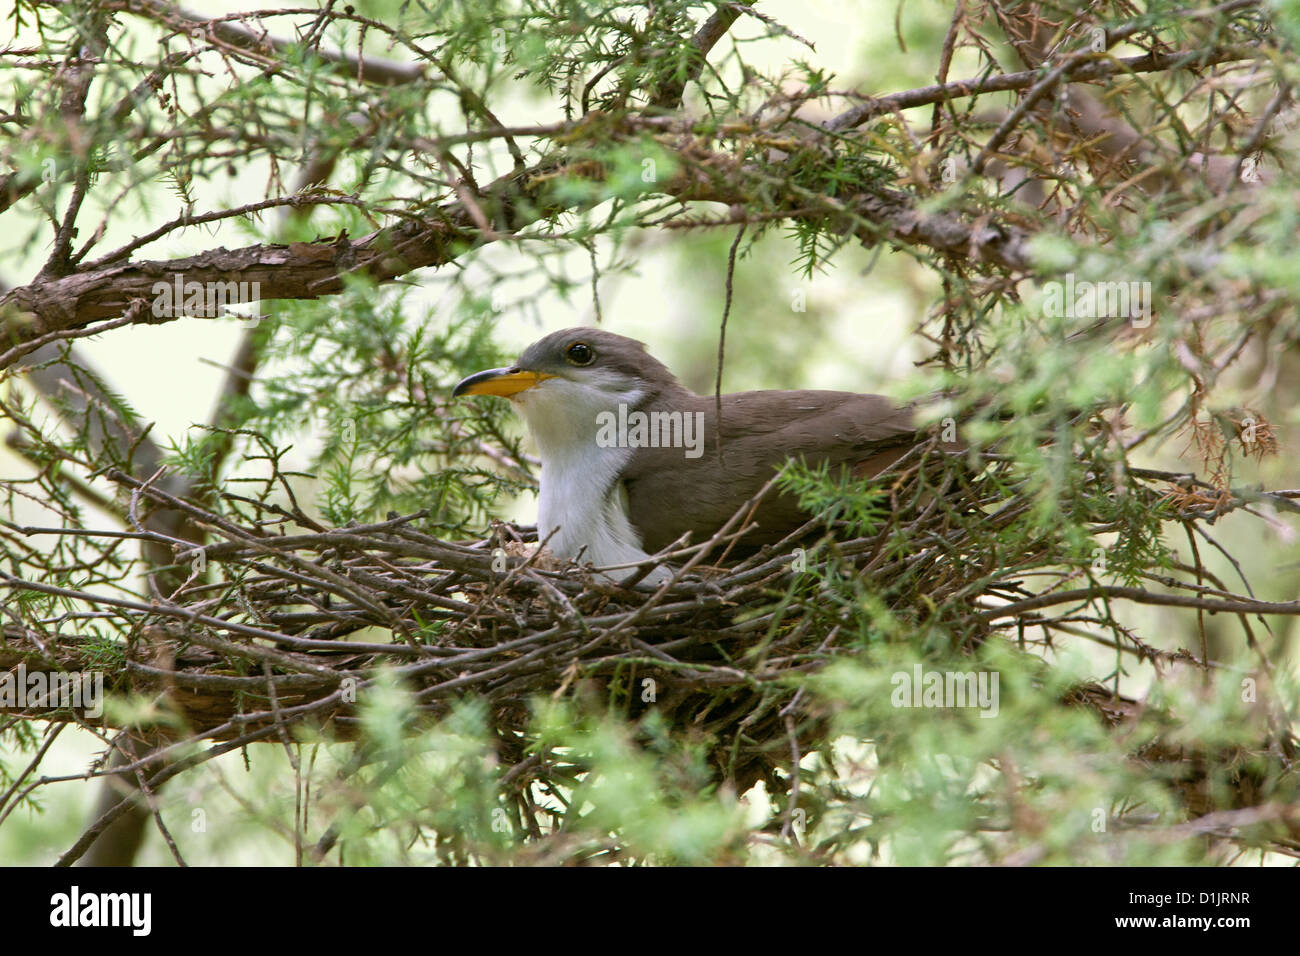 Cucucuculo giallo sul nido uccello nido nidi uccelli songbird songbirds Ornithology Scienza natura natura ambiente cucucukoos Foto Stock